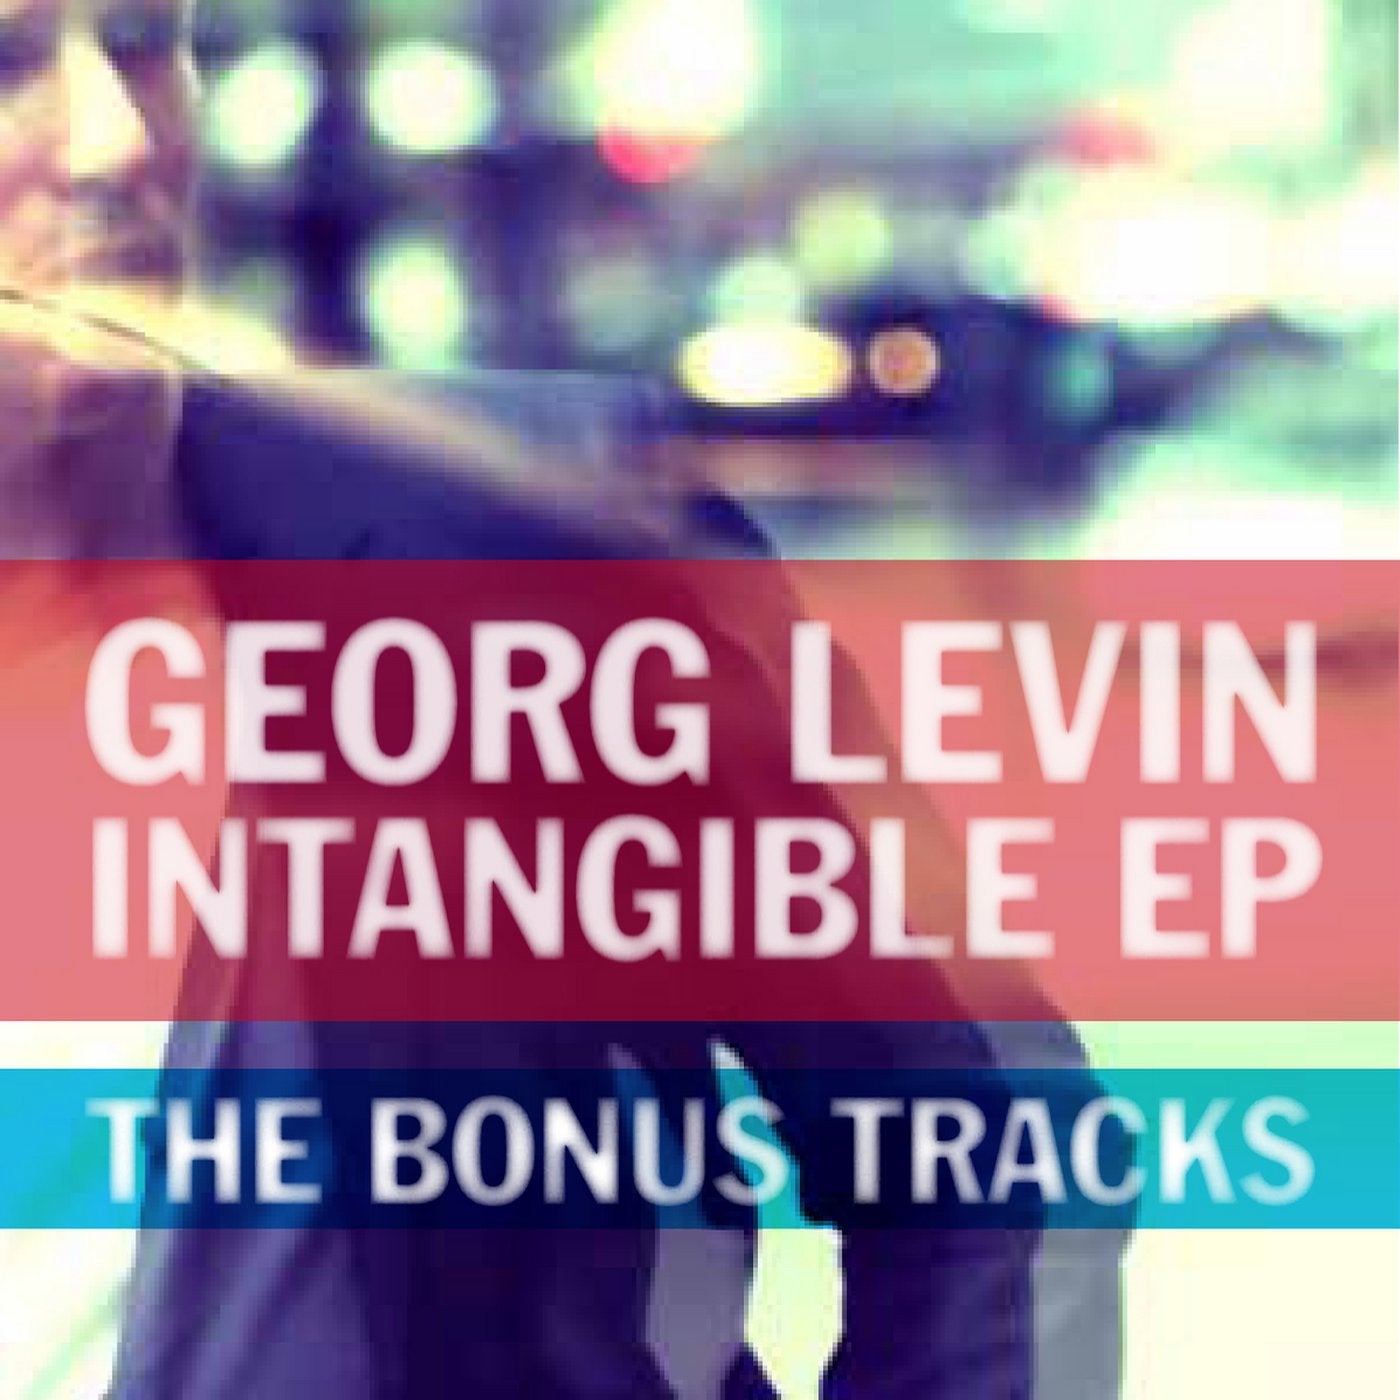 Intangible EP - The Bonus Tracks